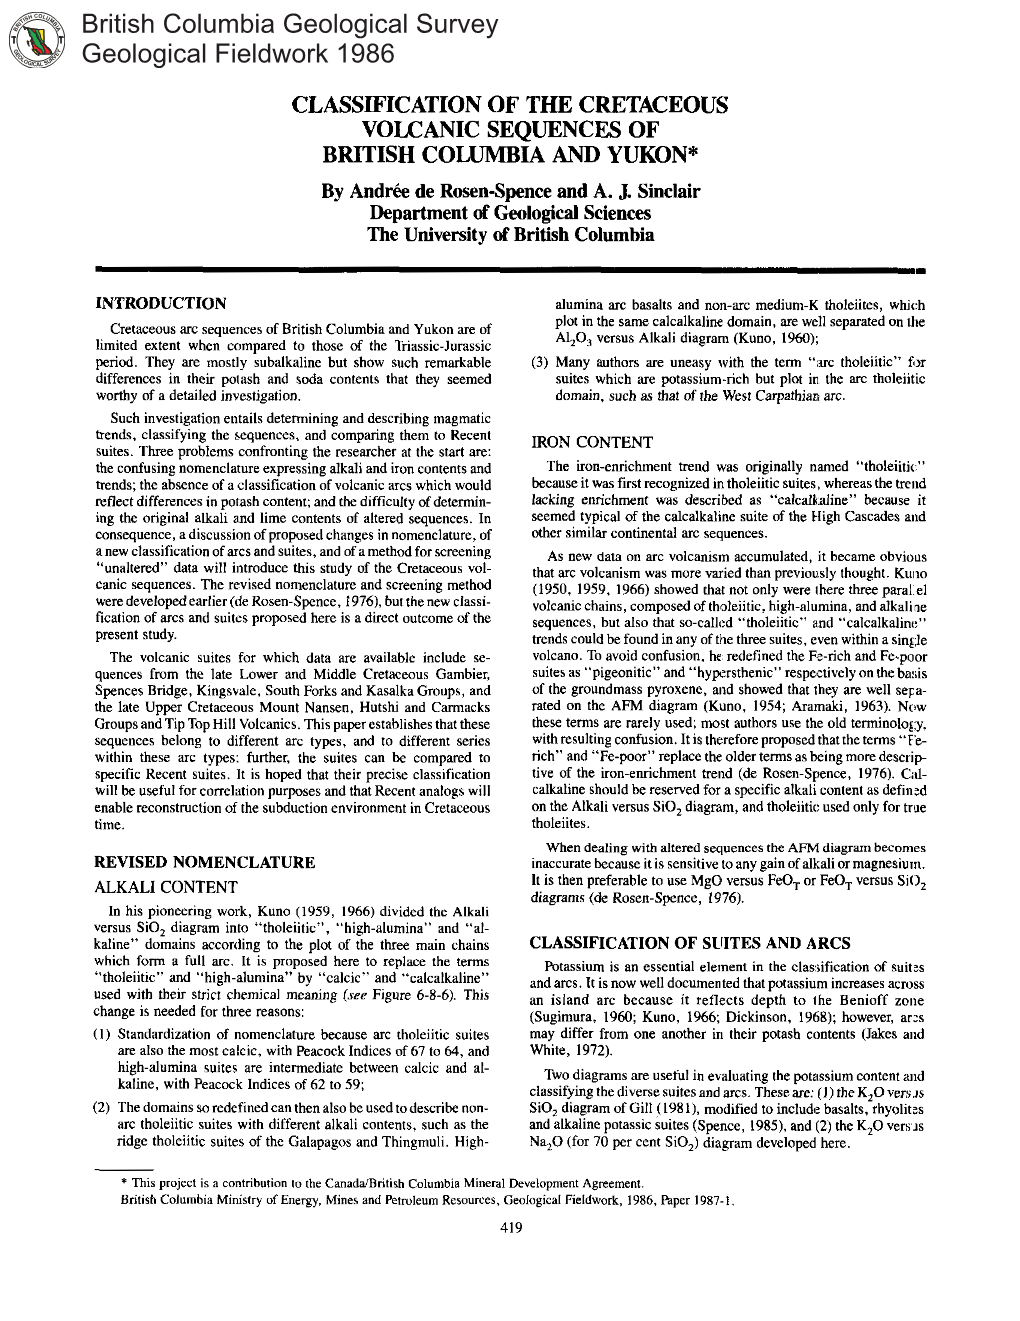 British Columbia Geological Survey Geological Fieldwork 1986